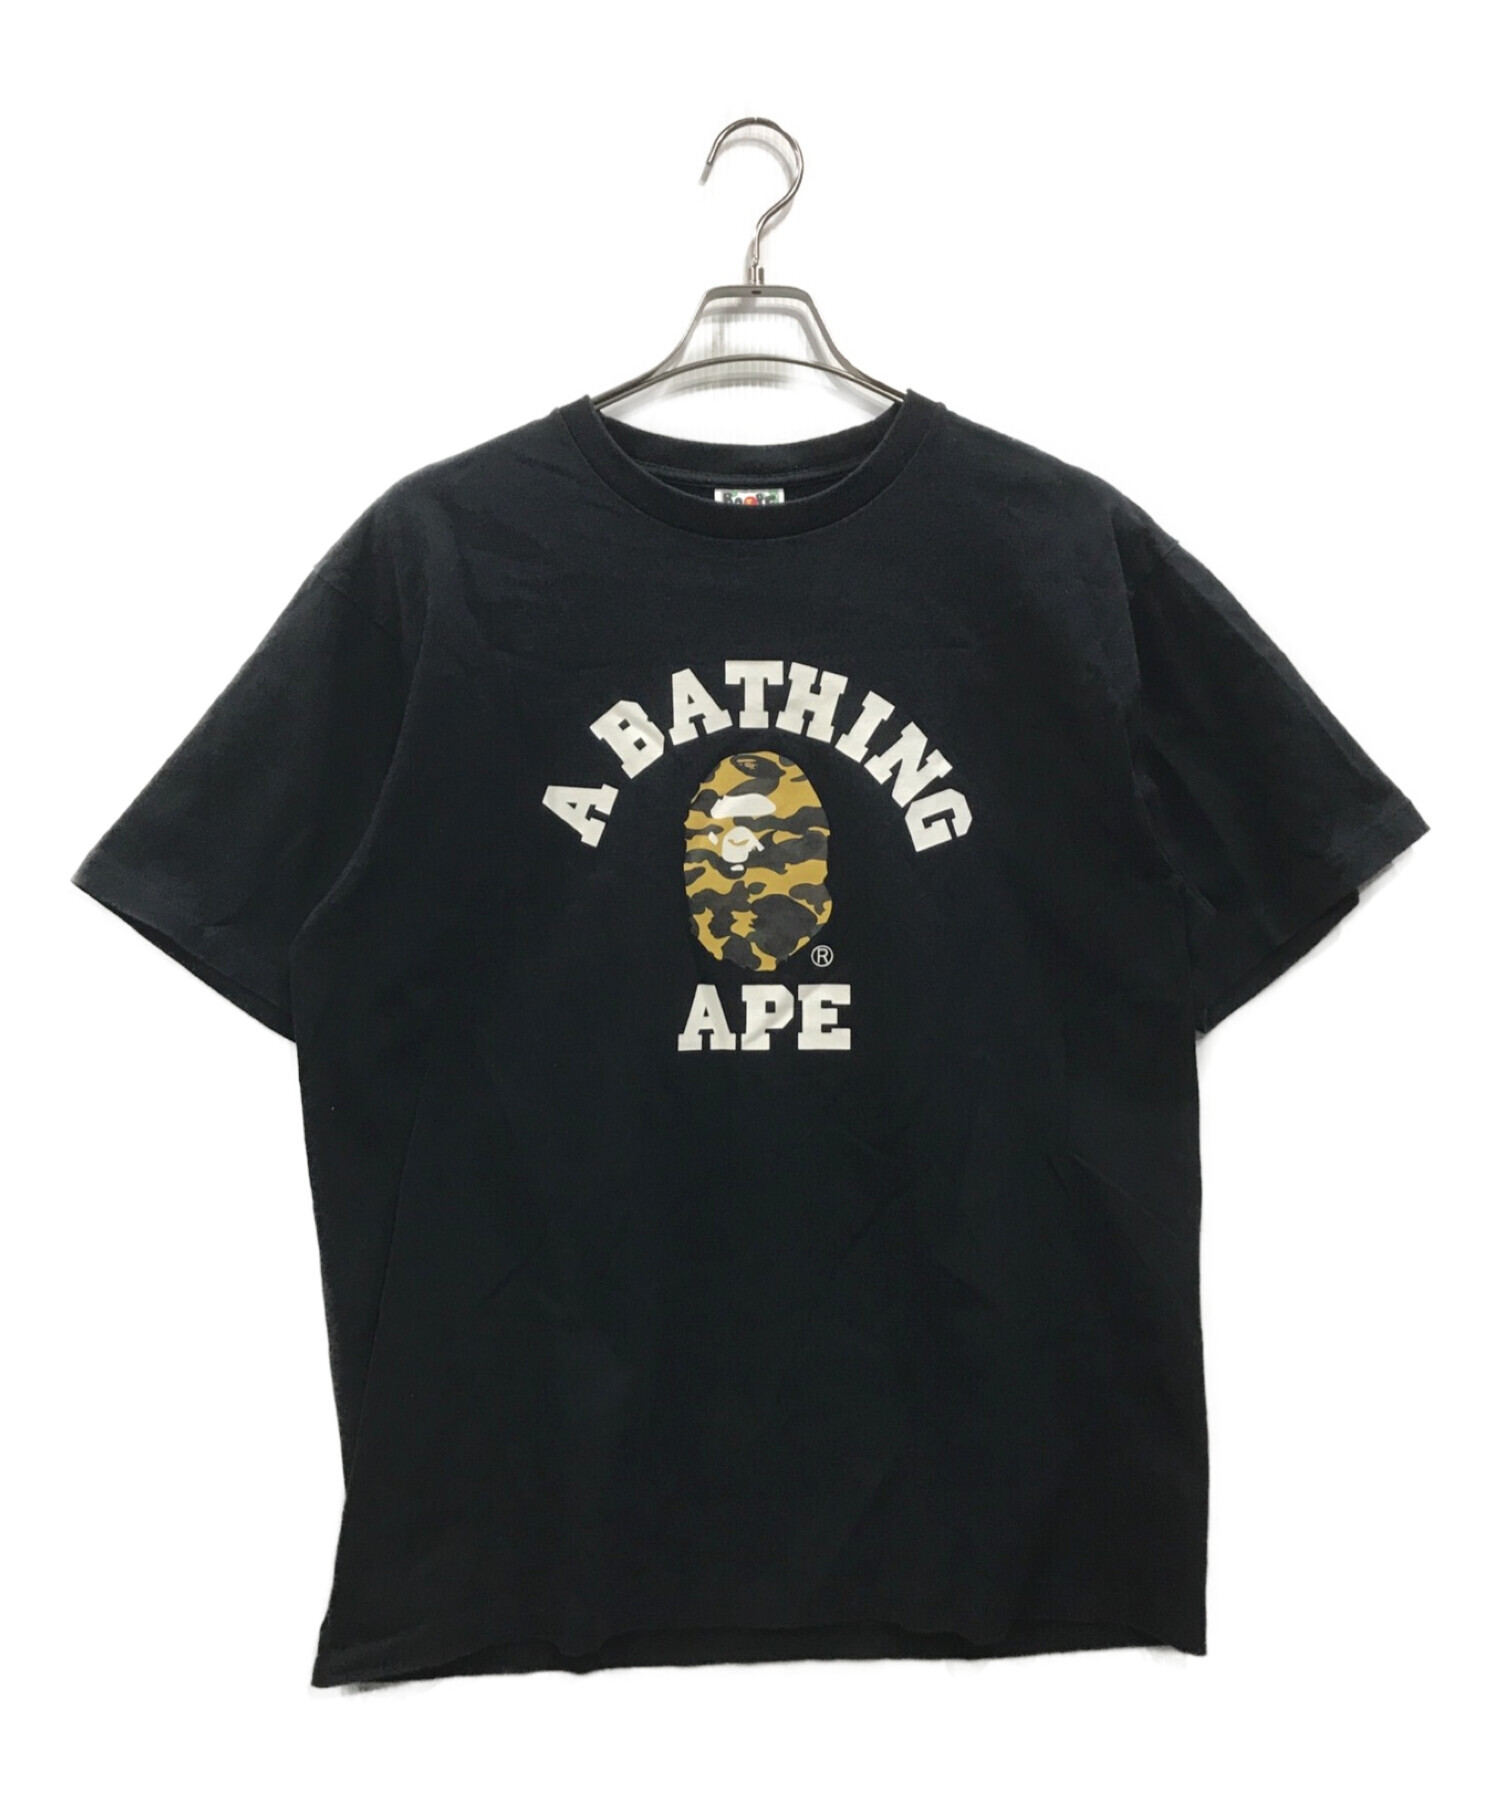 A BATHING APE (アベイシングエイプ) プリントTシャツ ブラック サイズ:XL